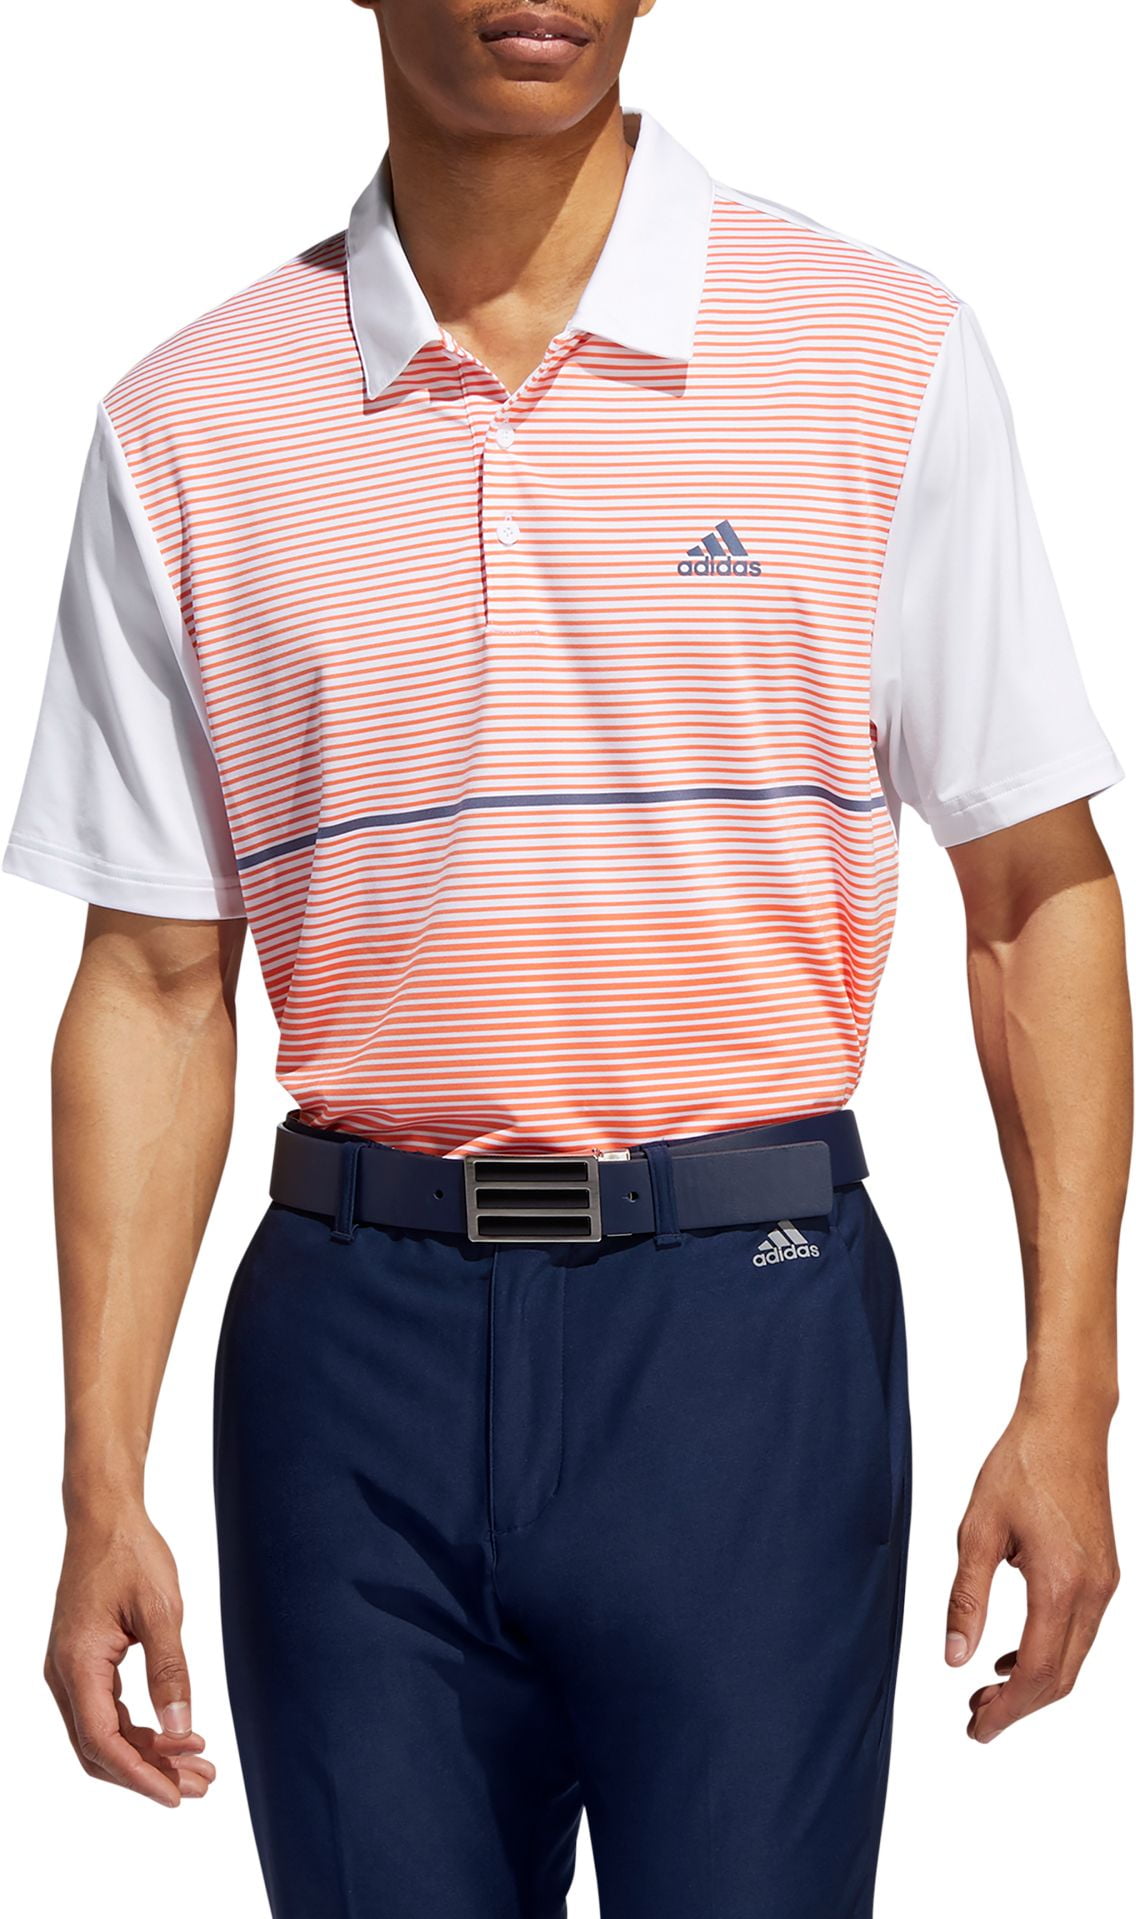 adidas men's ultimate365 colorblock golf polo